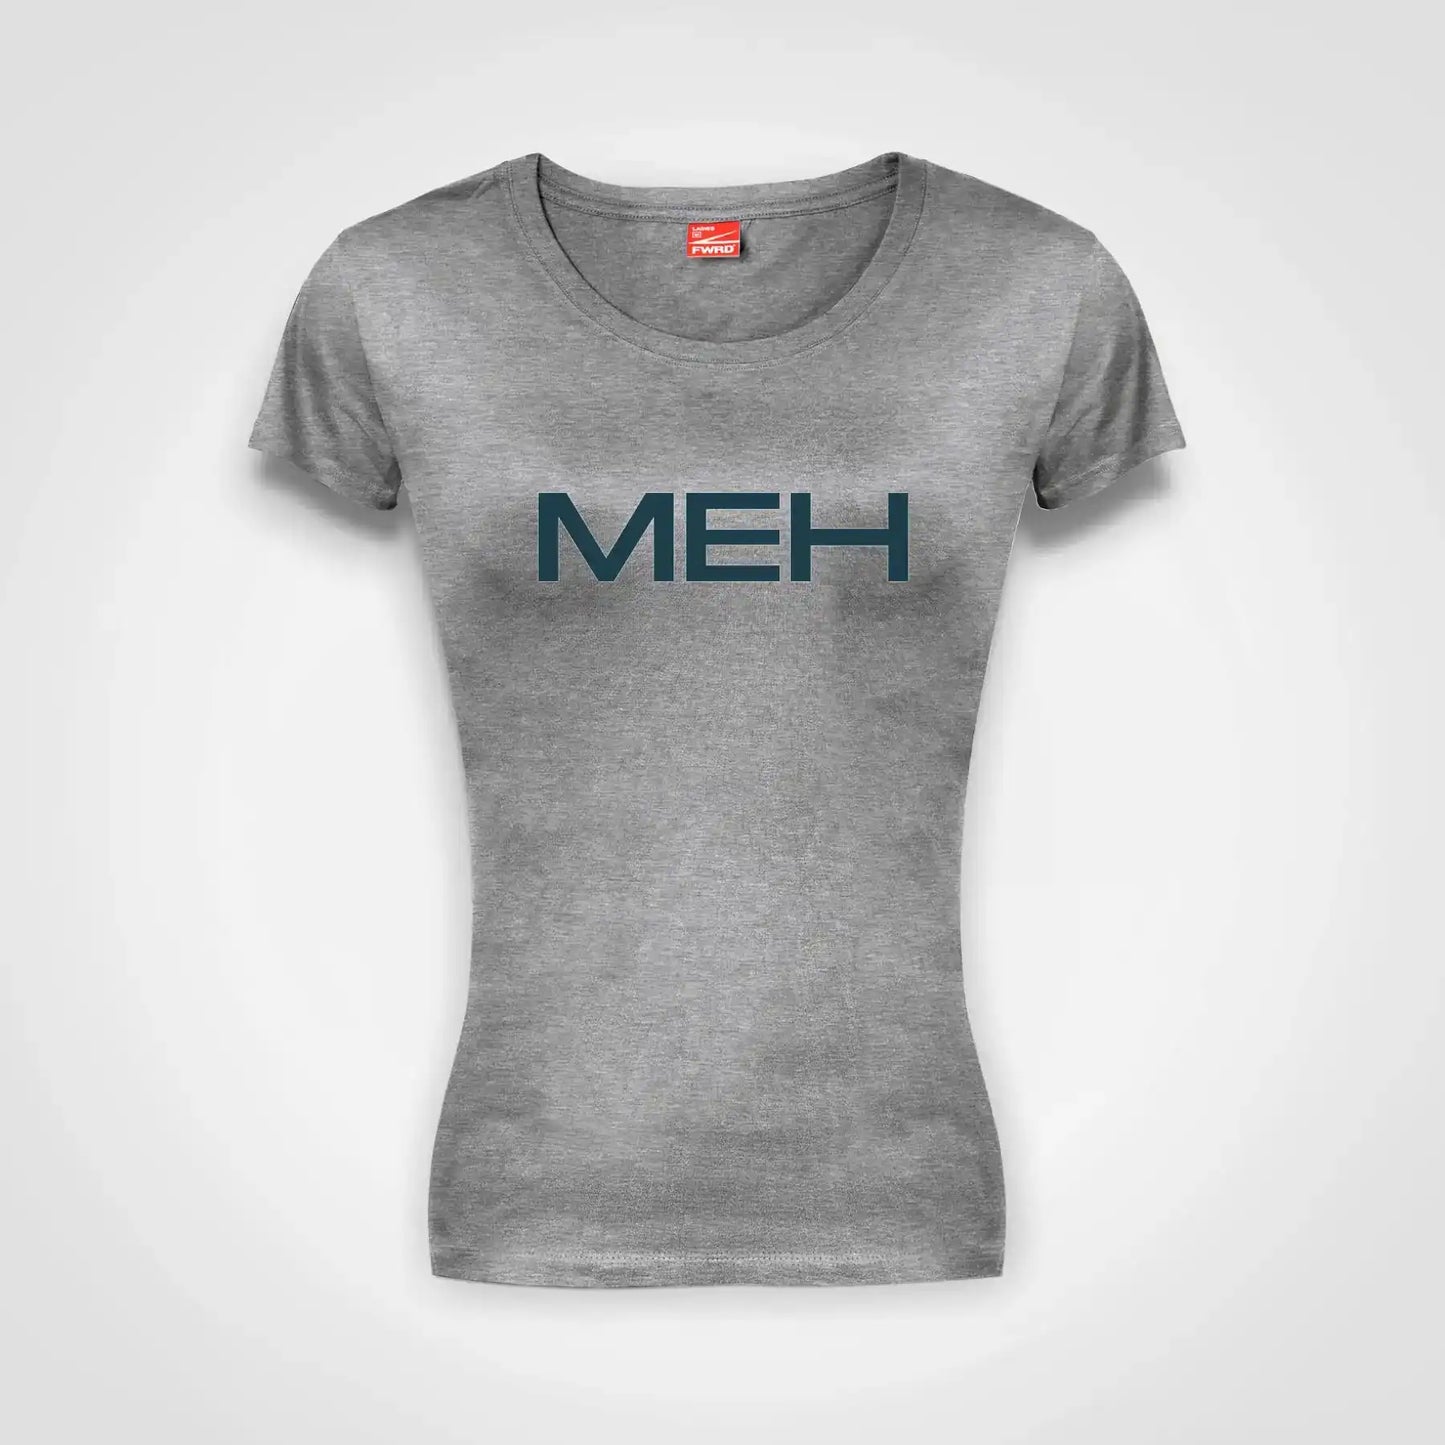 MEH Ladies Fitted T-Shirt Grey-Melange IZZIT APPAREL